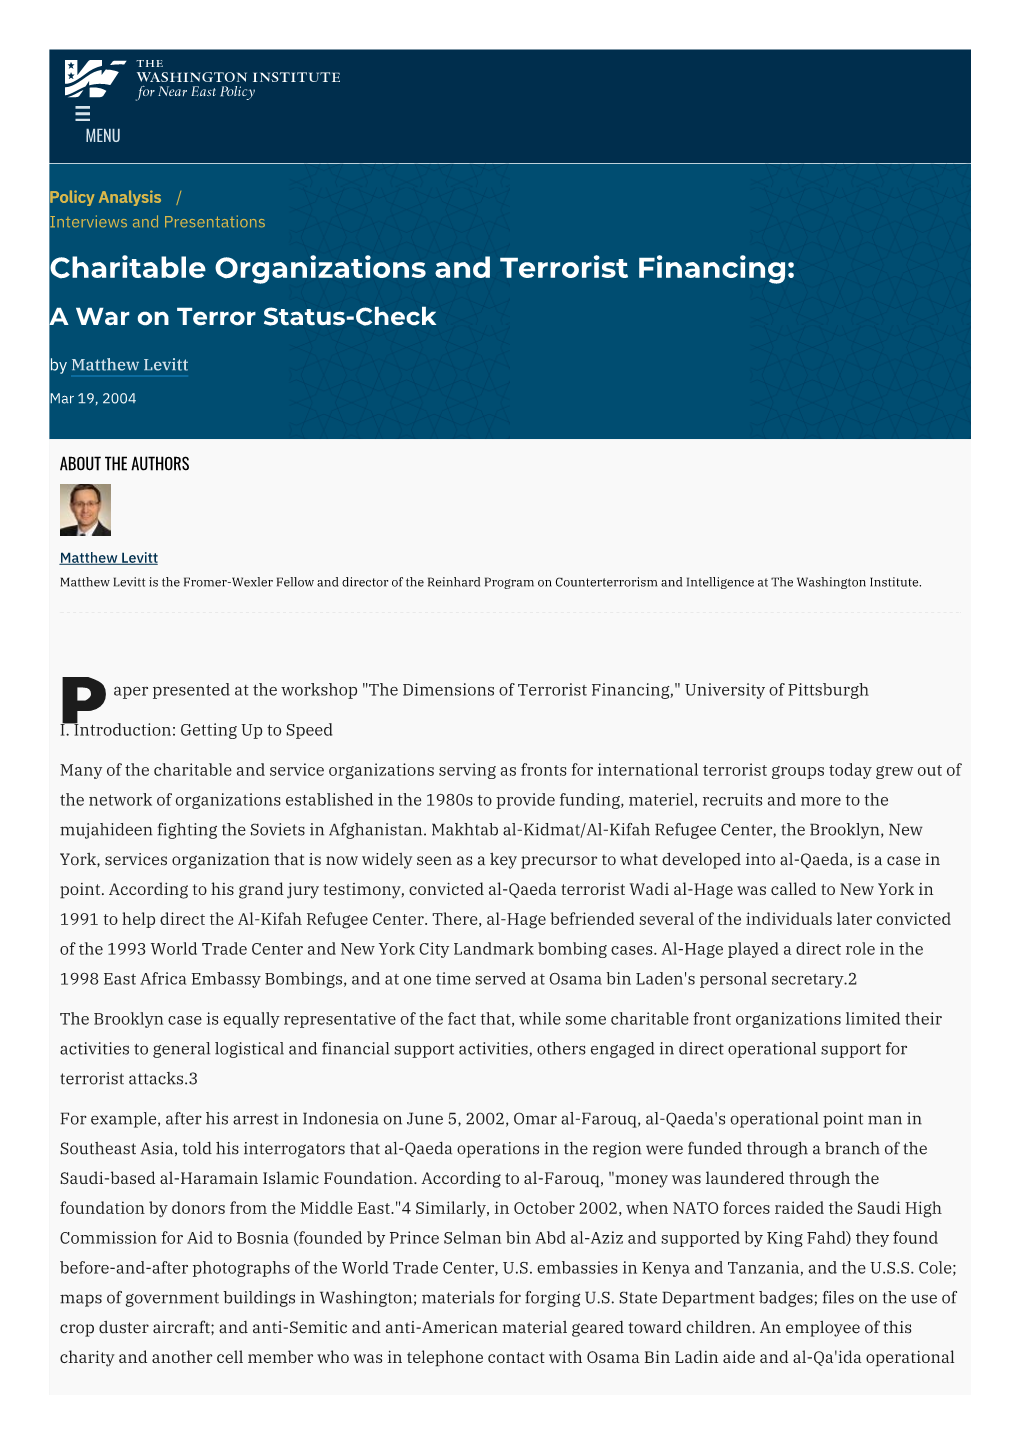 Charitable Organizations and Terrorist Financing: a War on Terror Status-Check by Matthew Levitt